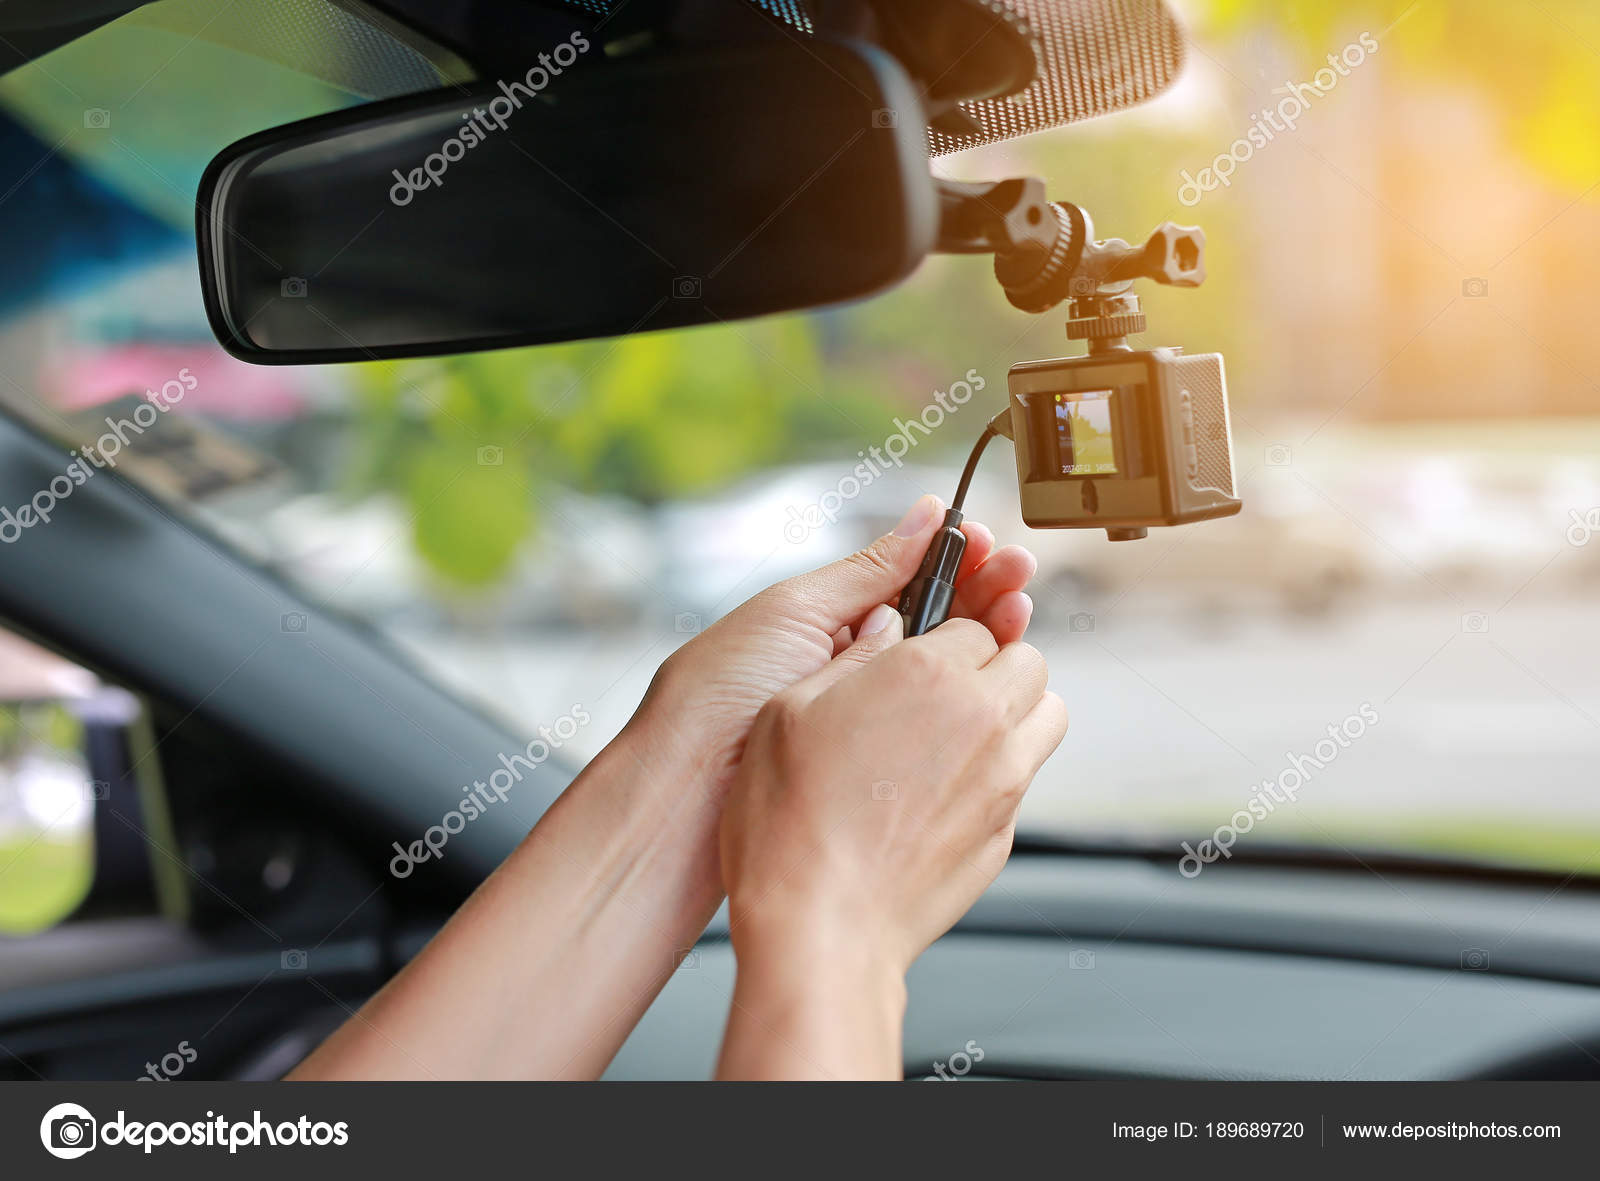 https://st3.depositphotos.com/12318692/18968/i/1600/depositphotos_189689720-stock-photo-hands-installation-front-camera-car.jpg